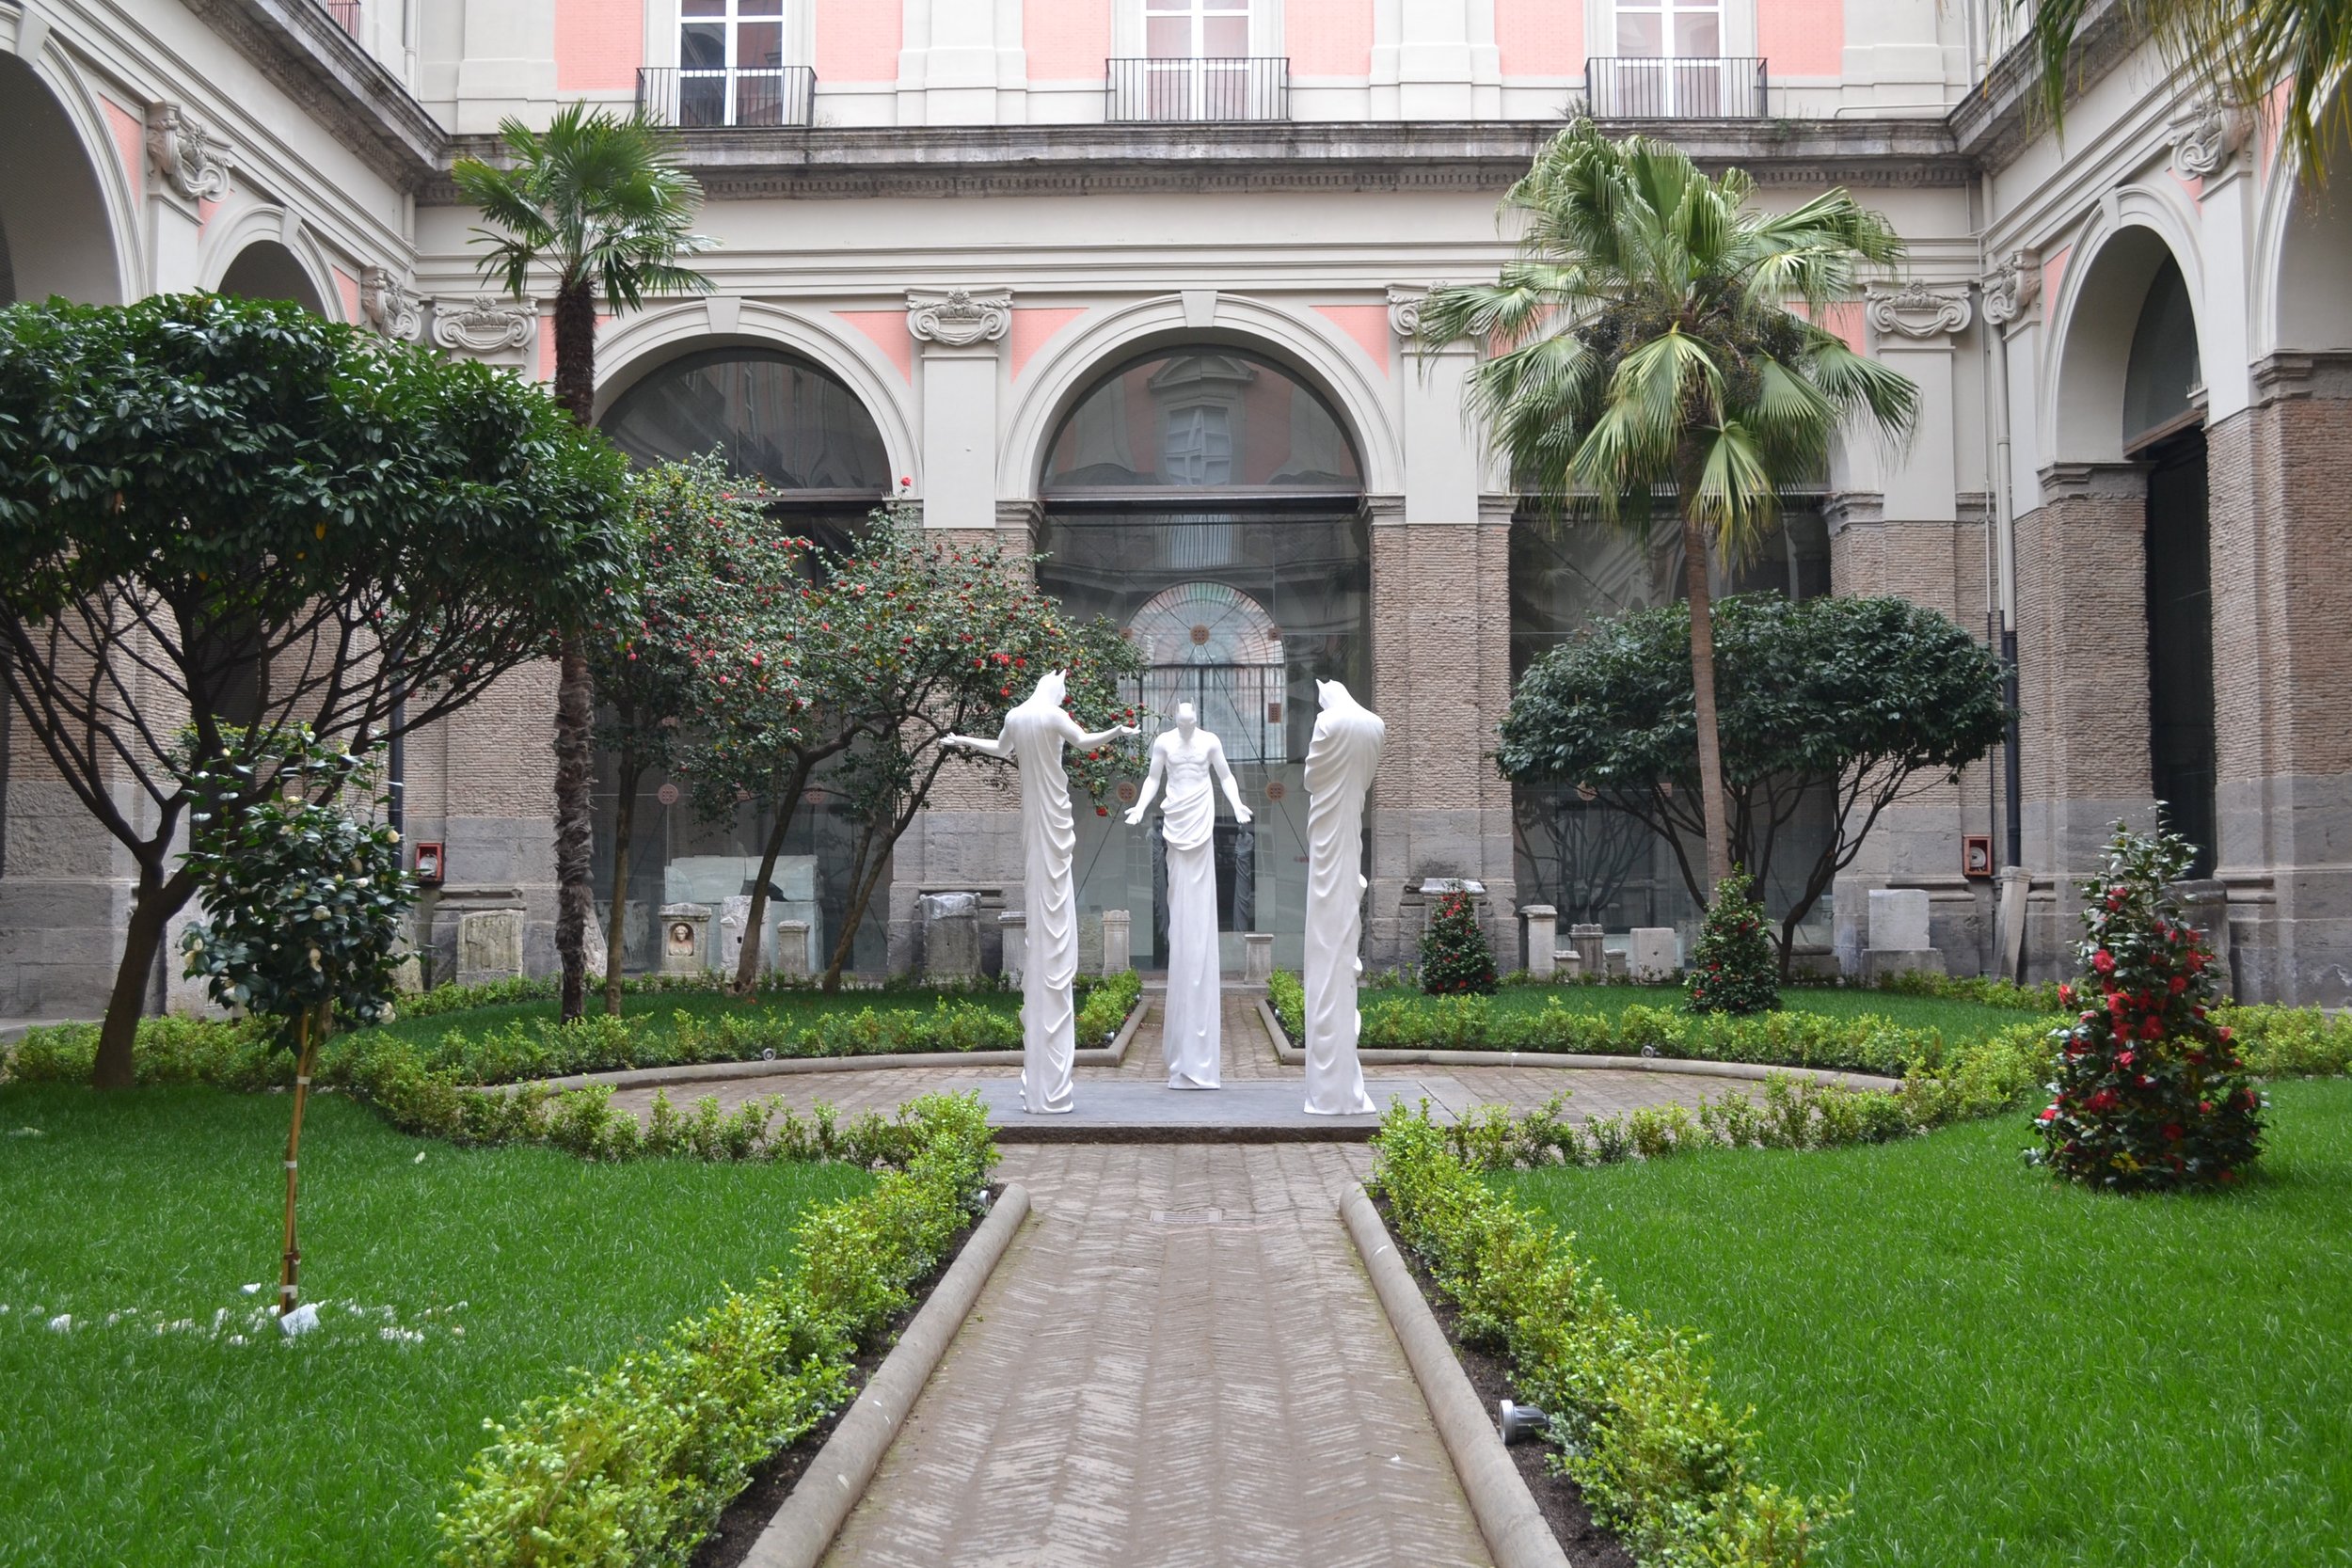    In Excelsis , 2013 . MANN - Museo Archeologico Nazionale di Napoli, Naples 2016. Installation view. Photo: Studio Adrian Tranquilli 